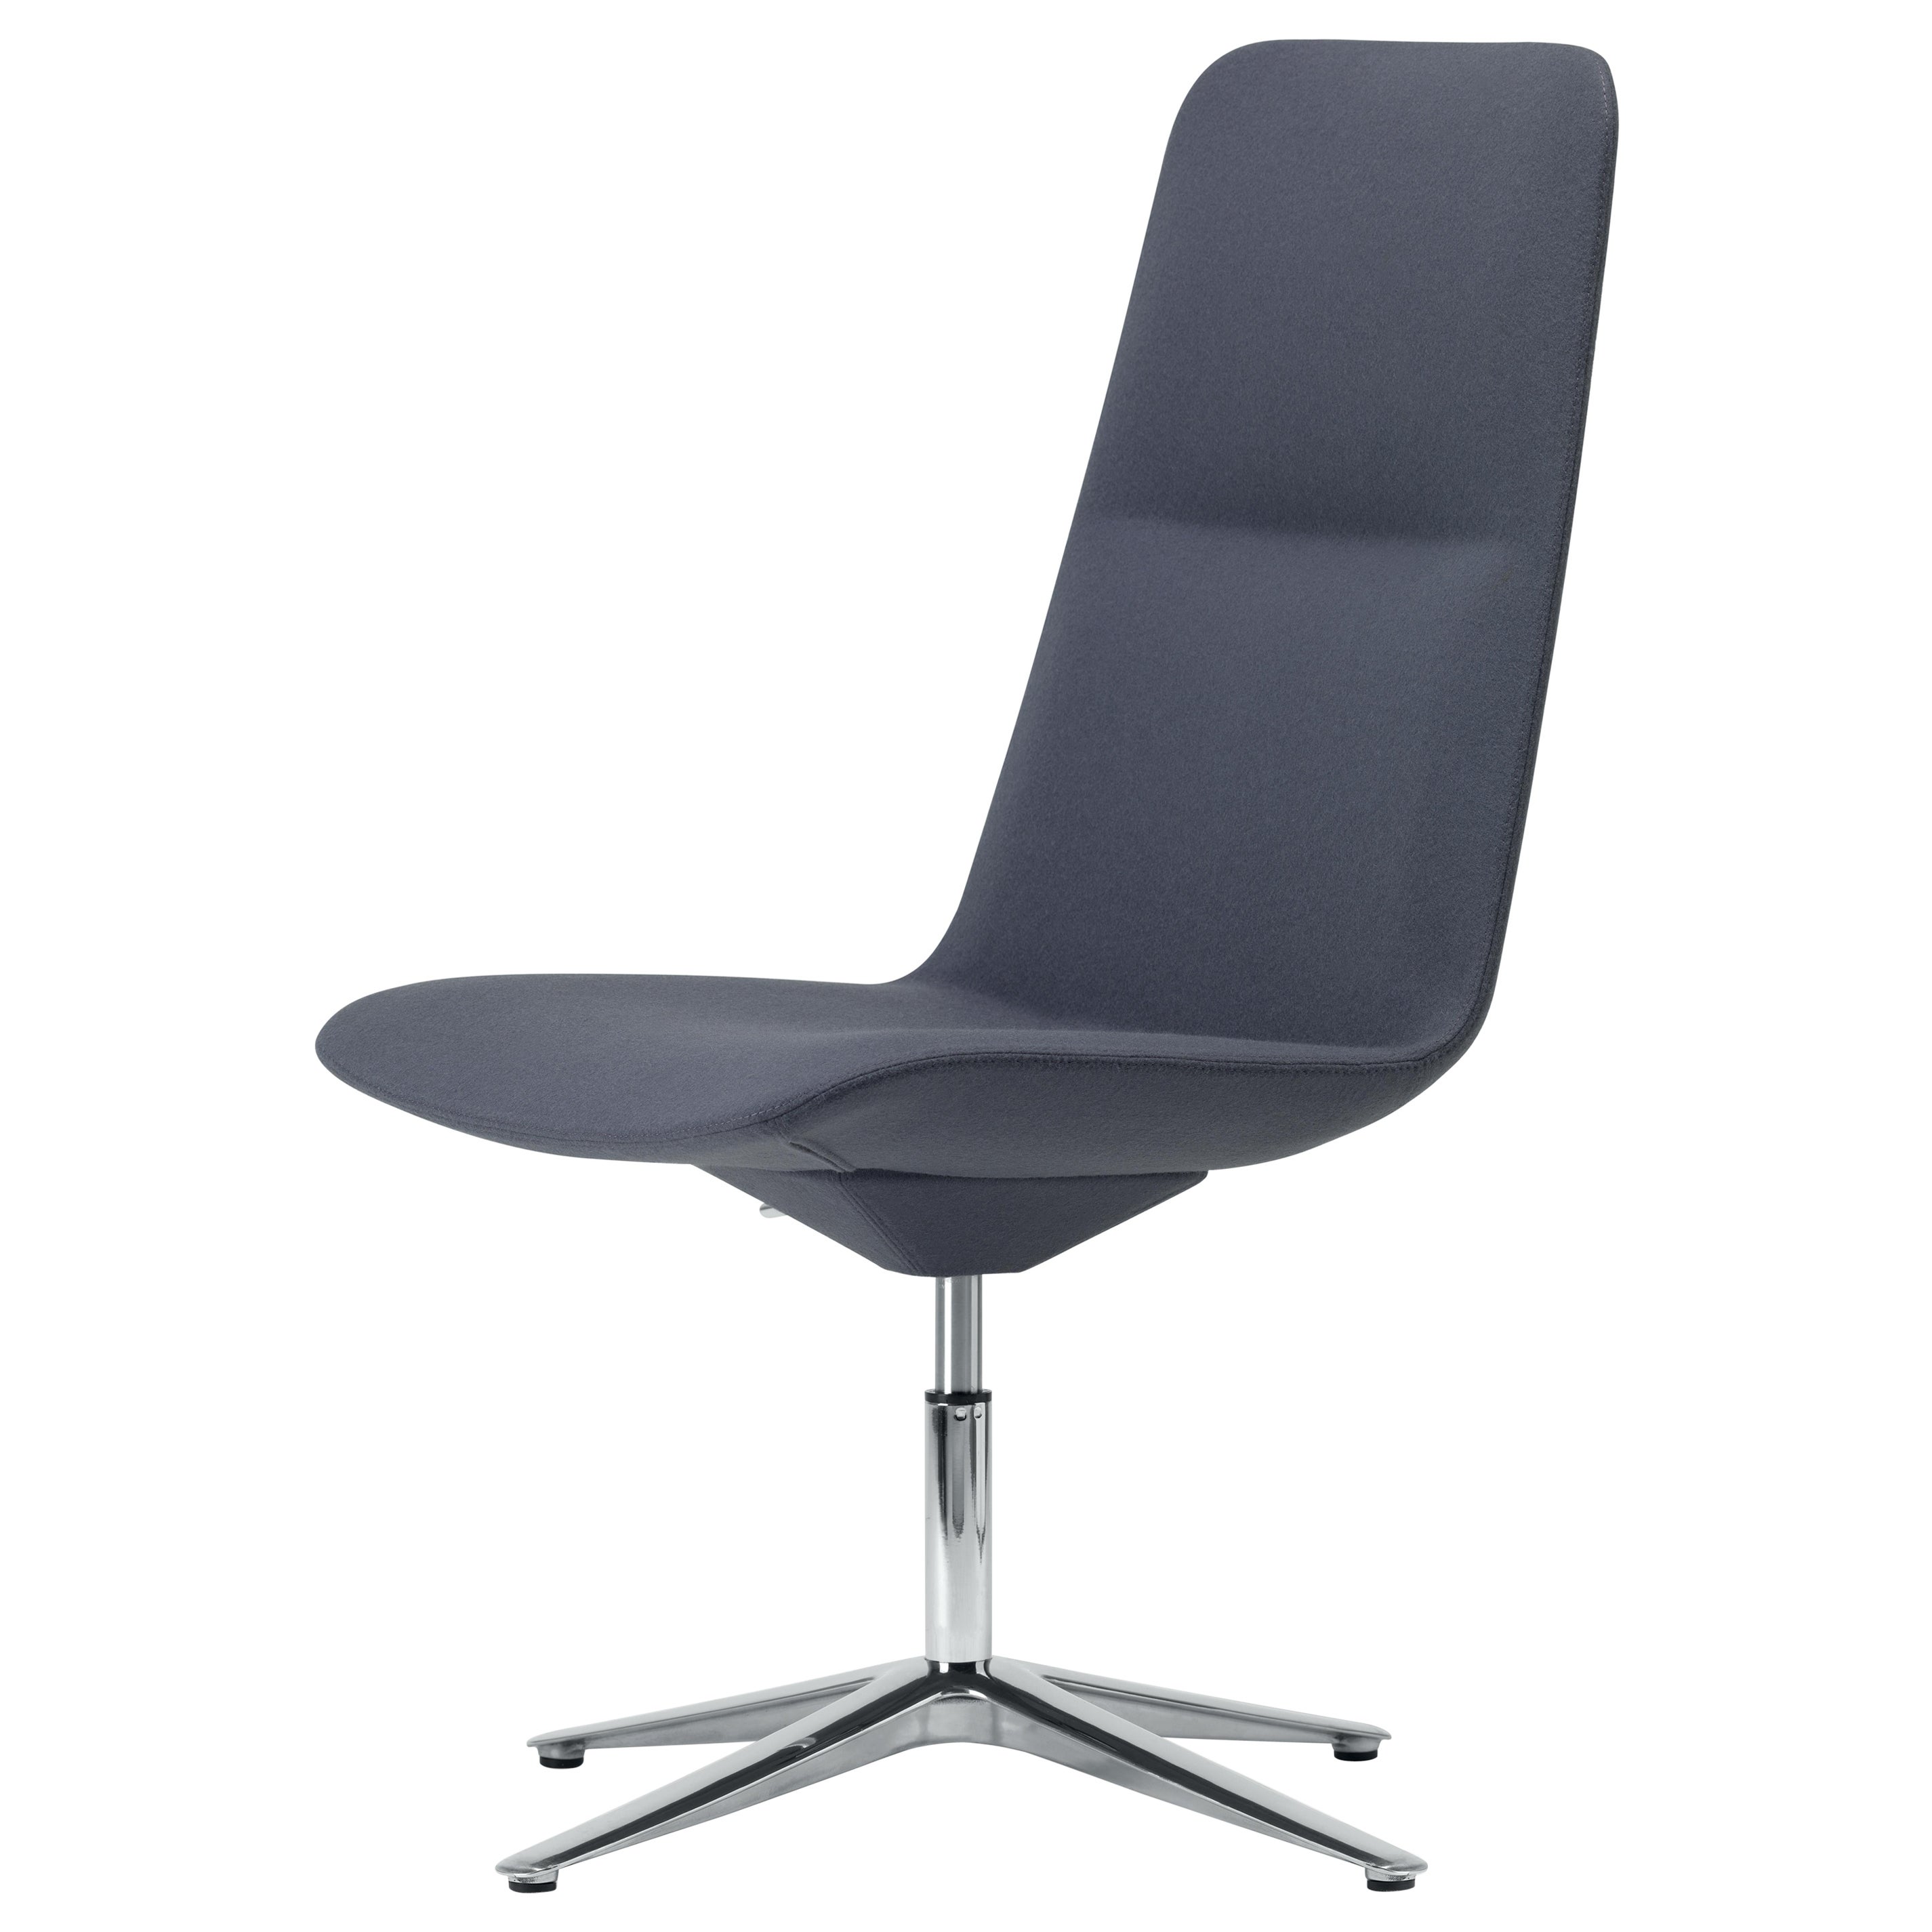 Alias 807 Slim Conference Medium 4 Stuhl mit grauem Sitz und poliertem Aluminiumgestell